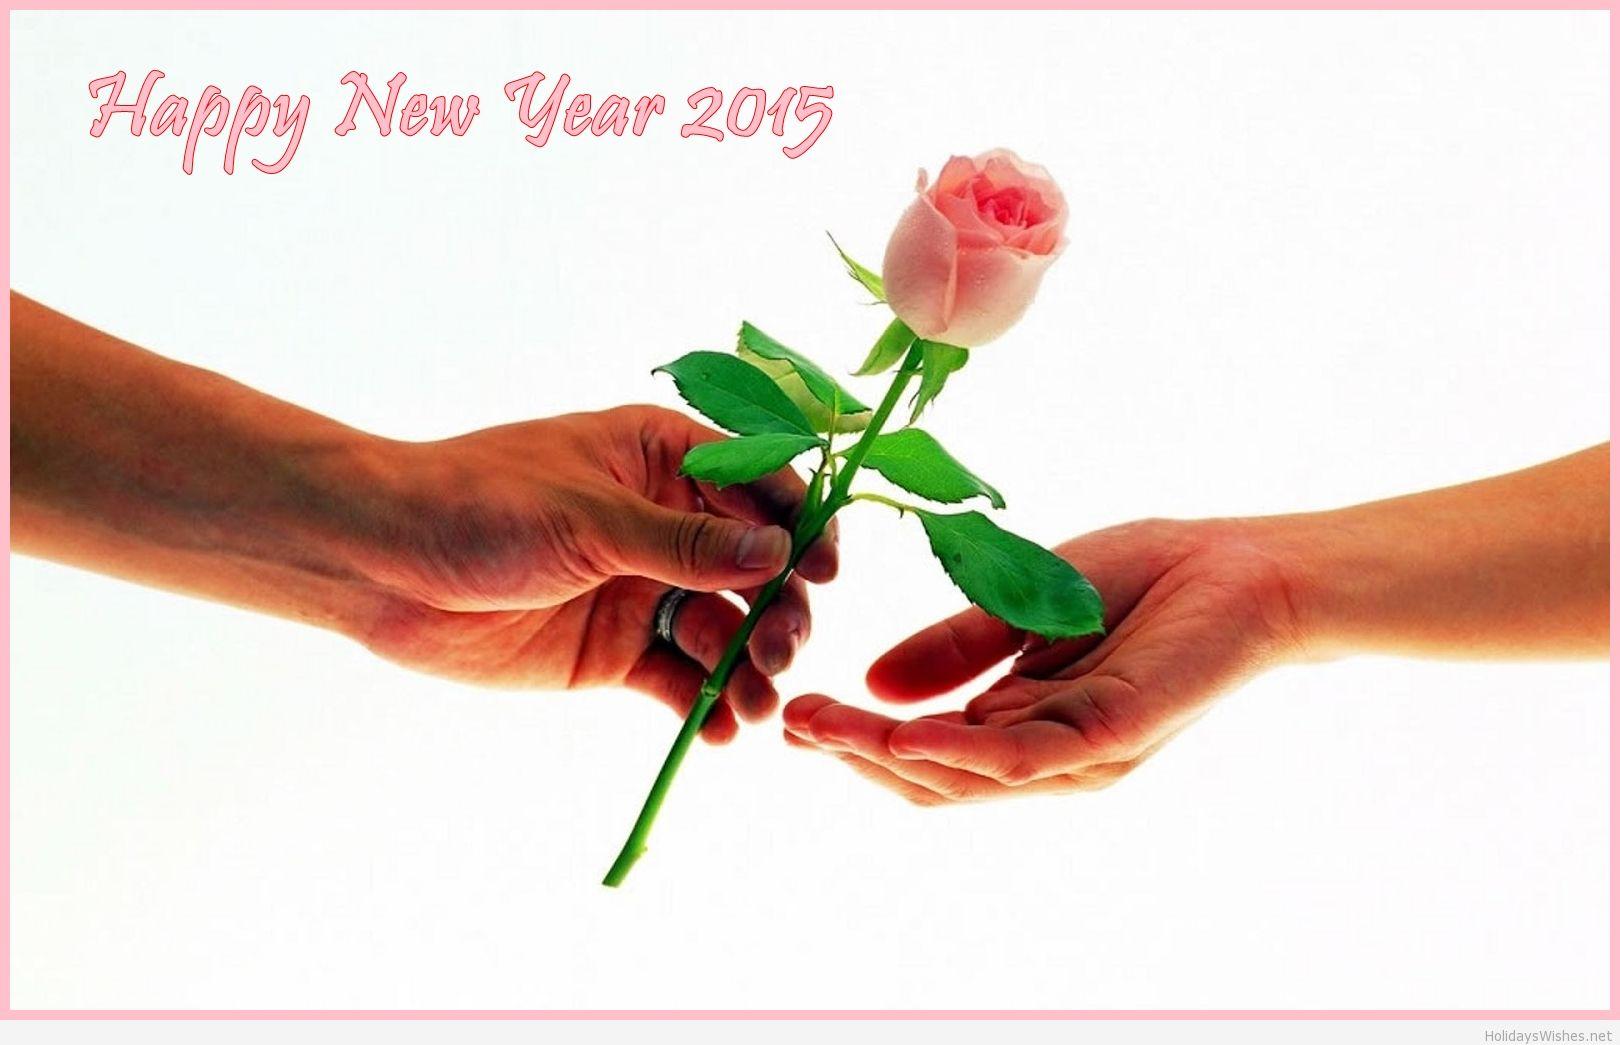 I love you happy new year 2015